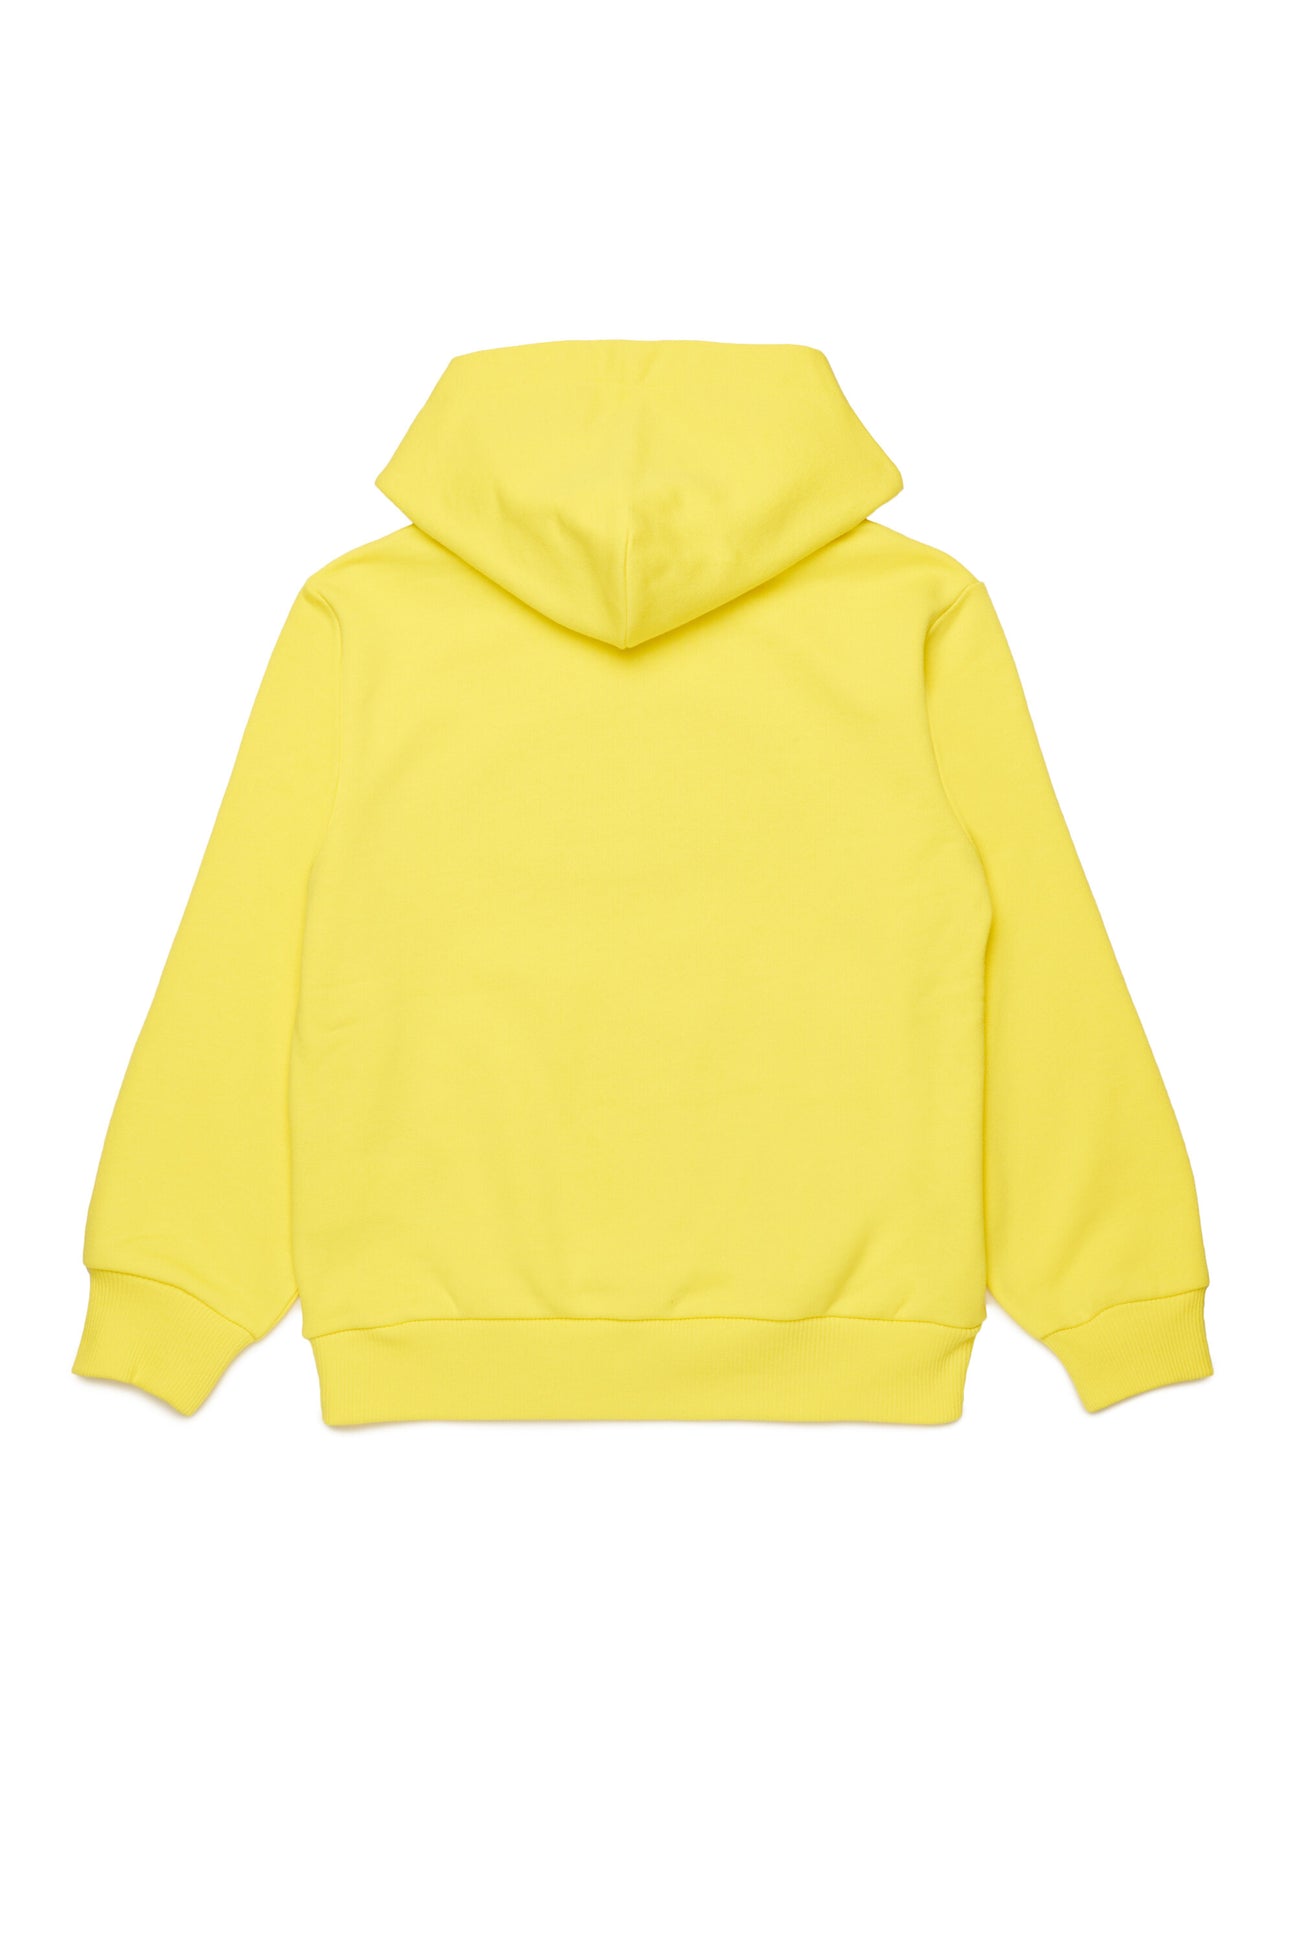 Oval D branded hooded sweatshirt Oval D branded hooded sweatshirt